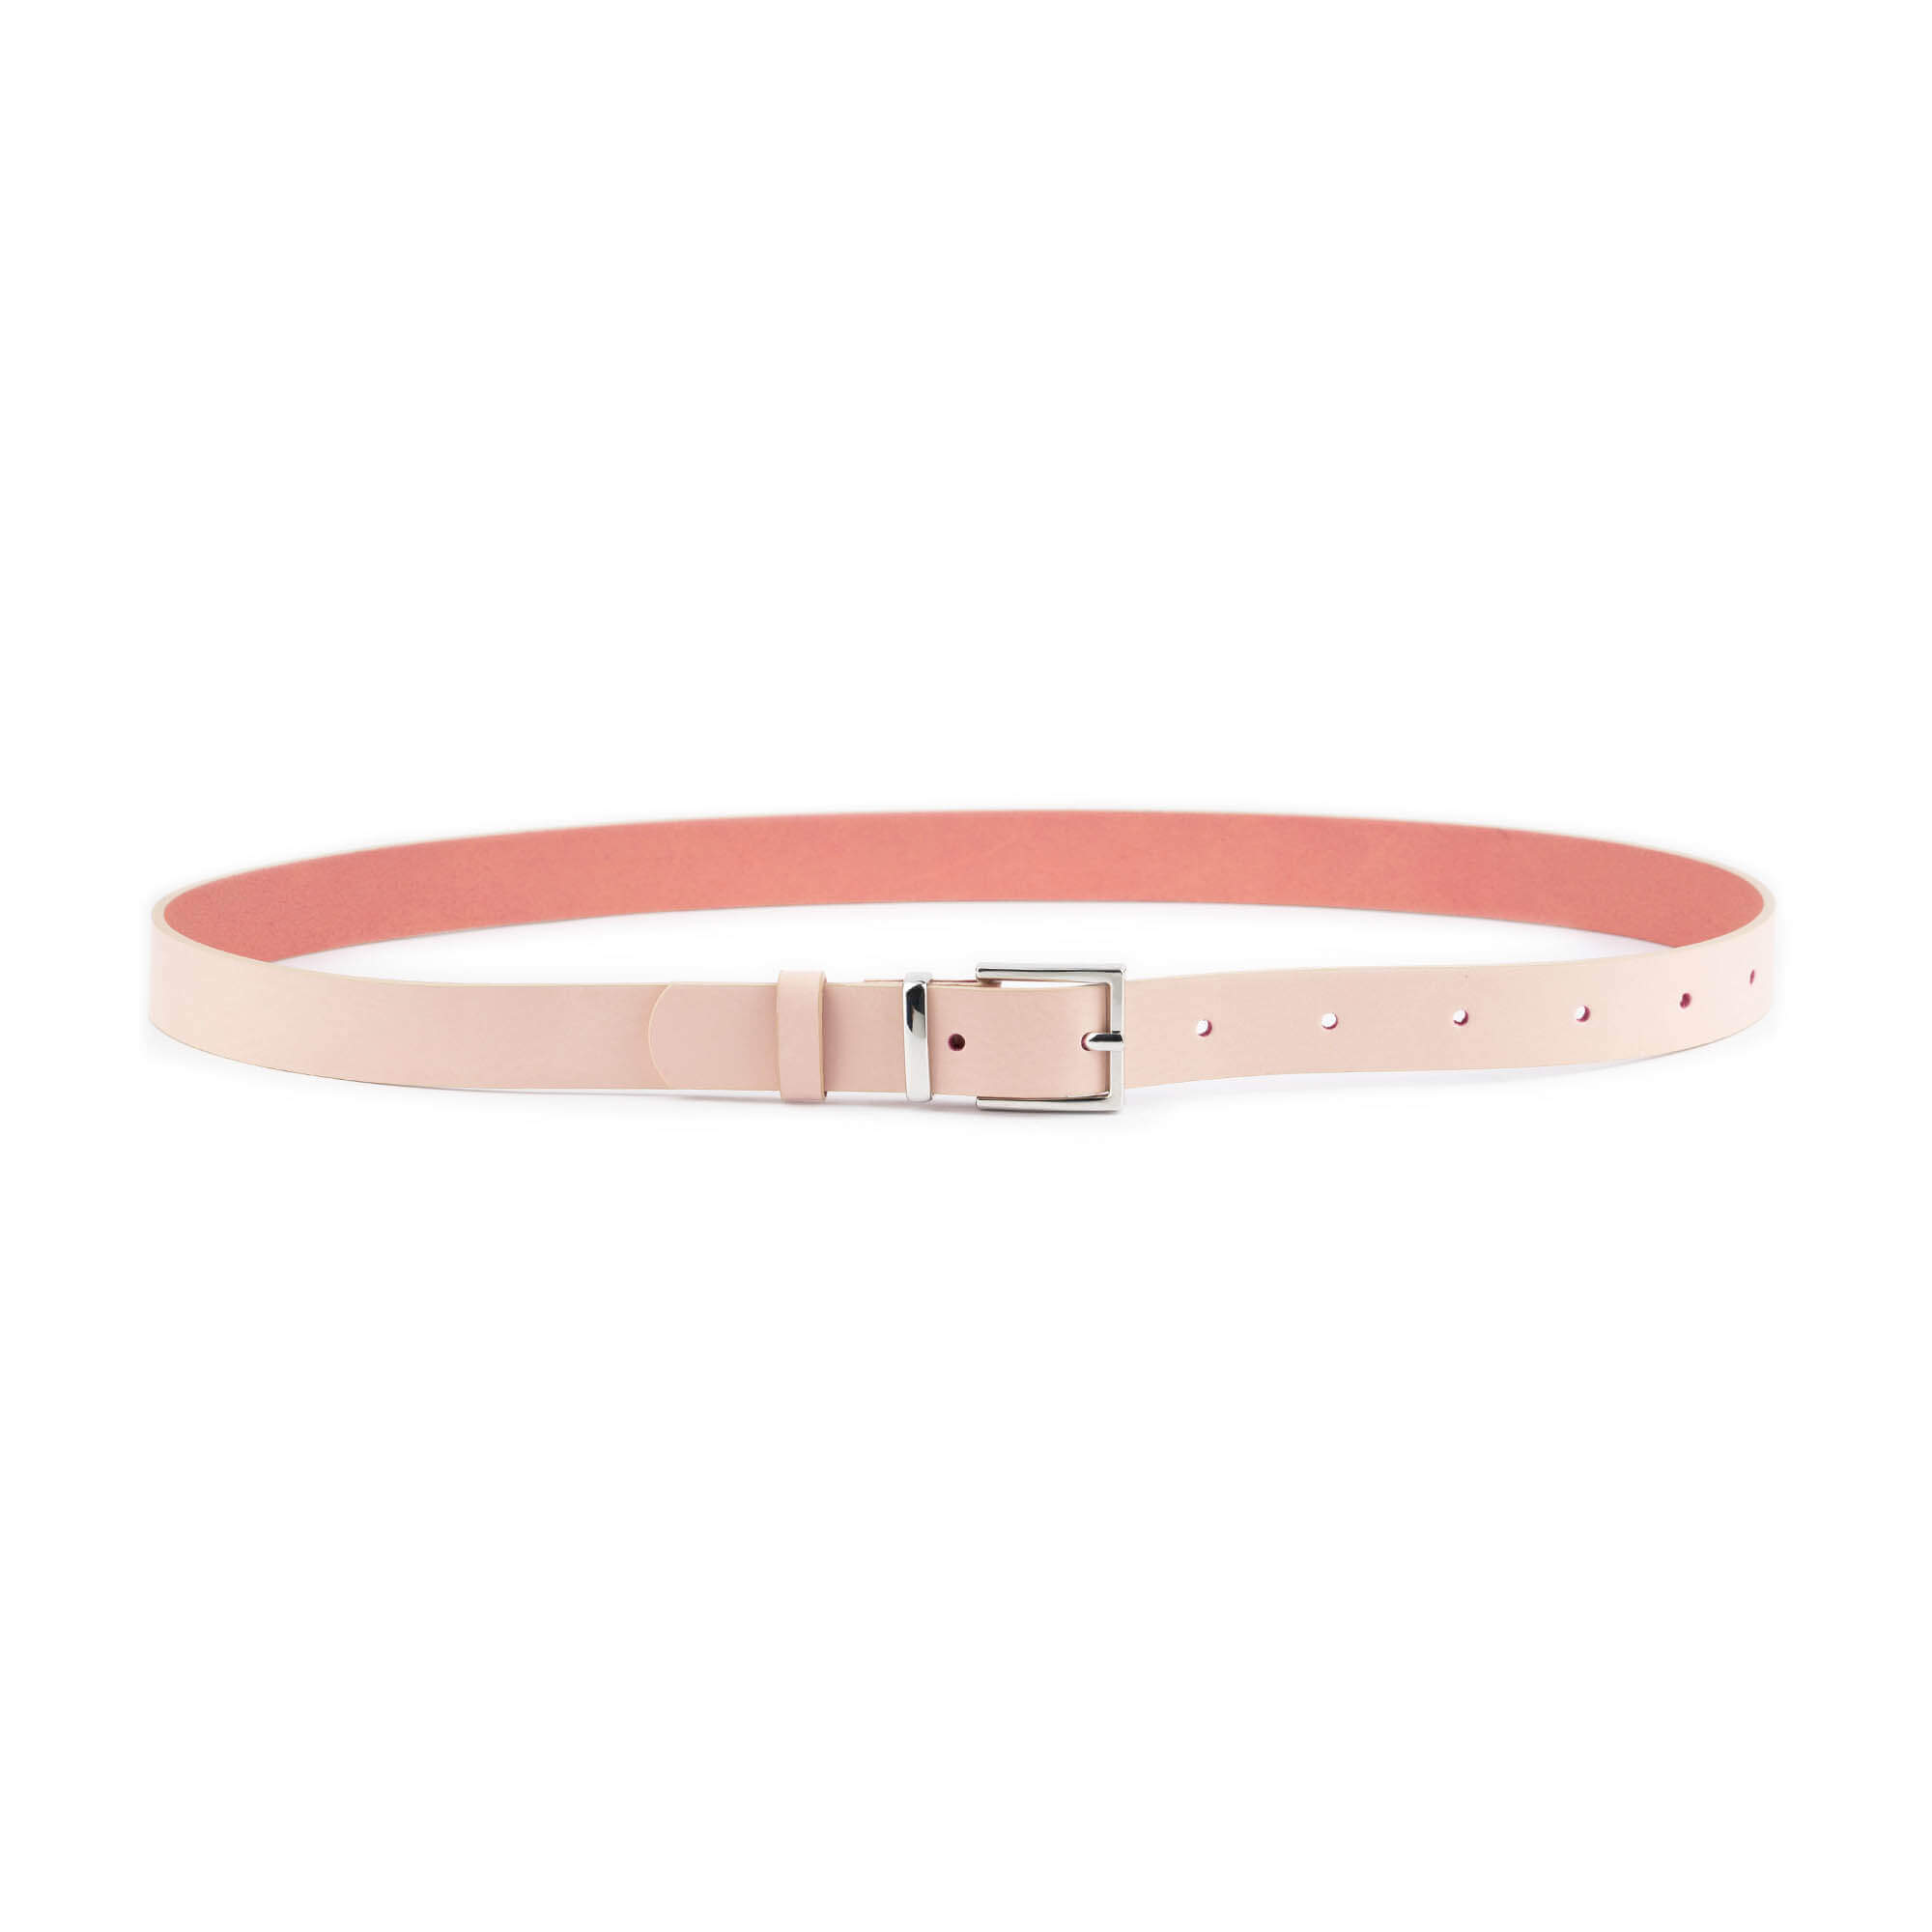 Buy Women's Pink Belt For Dress - Genuine Leather 2.5 Cm